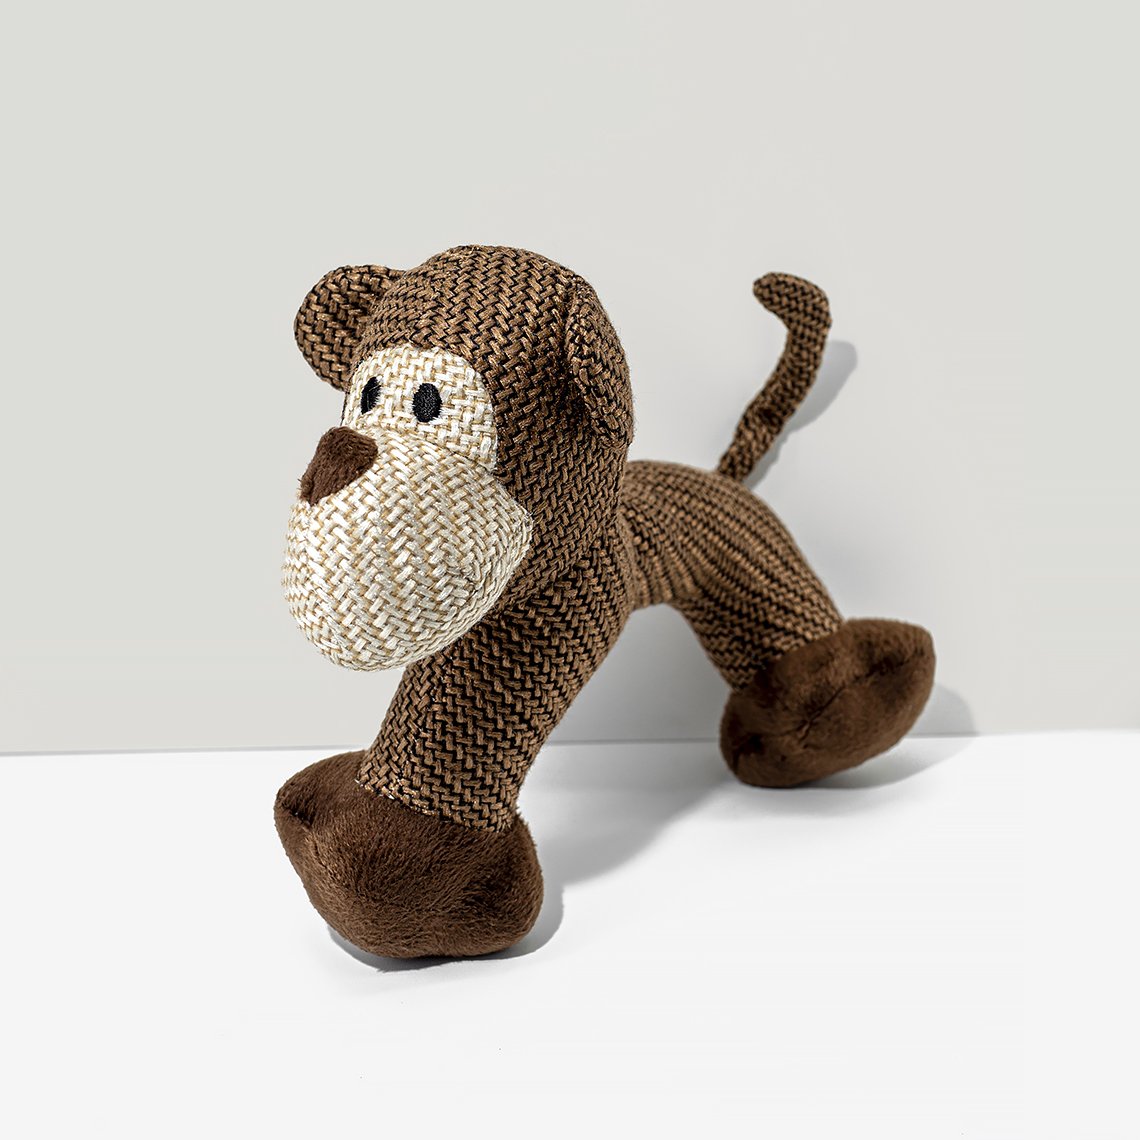 A monkey dog toy on the white background.